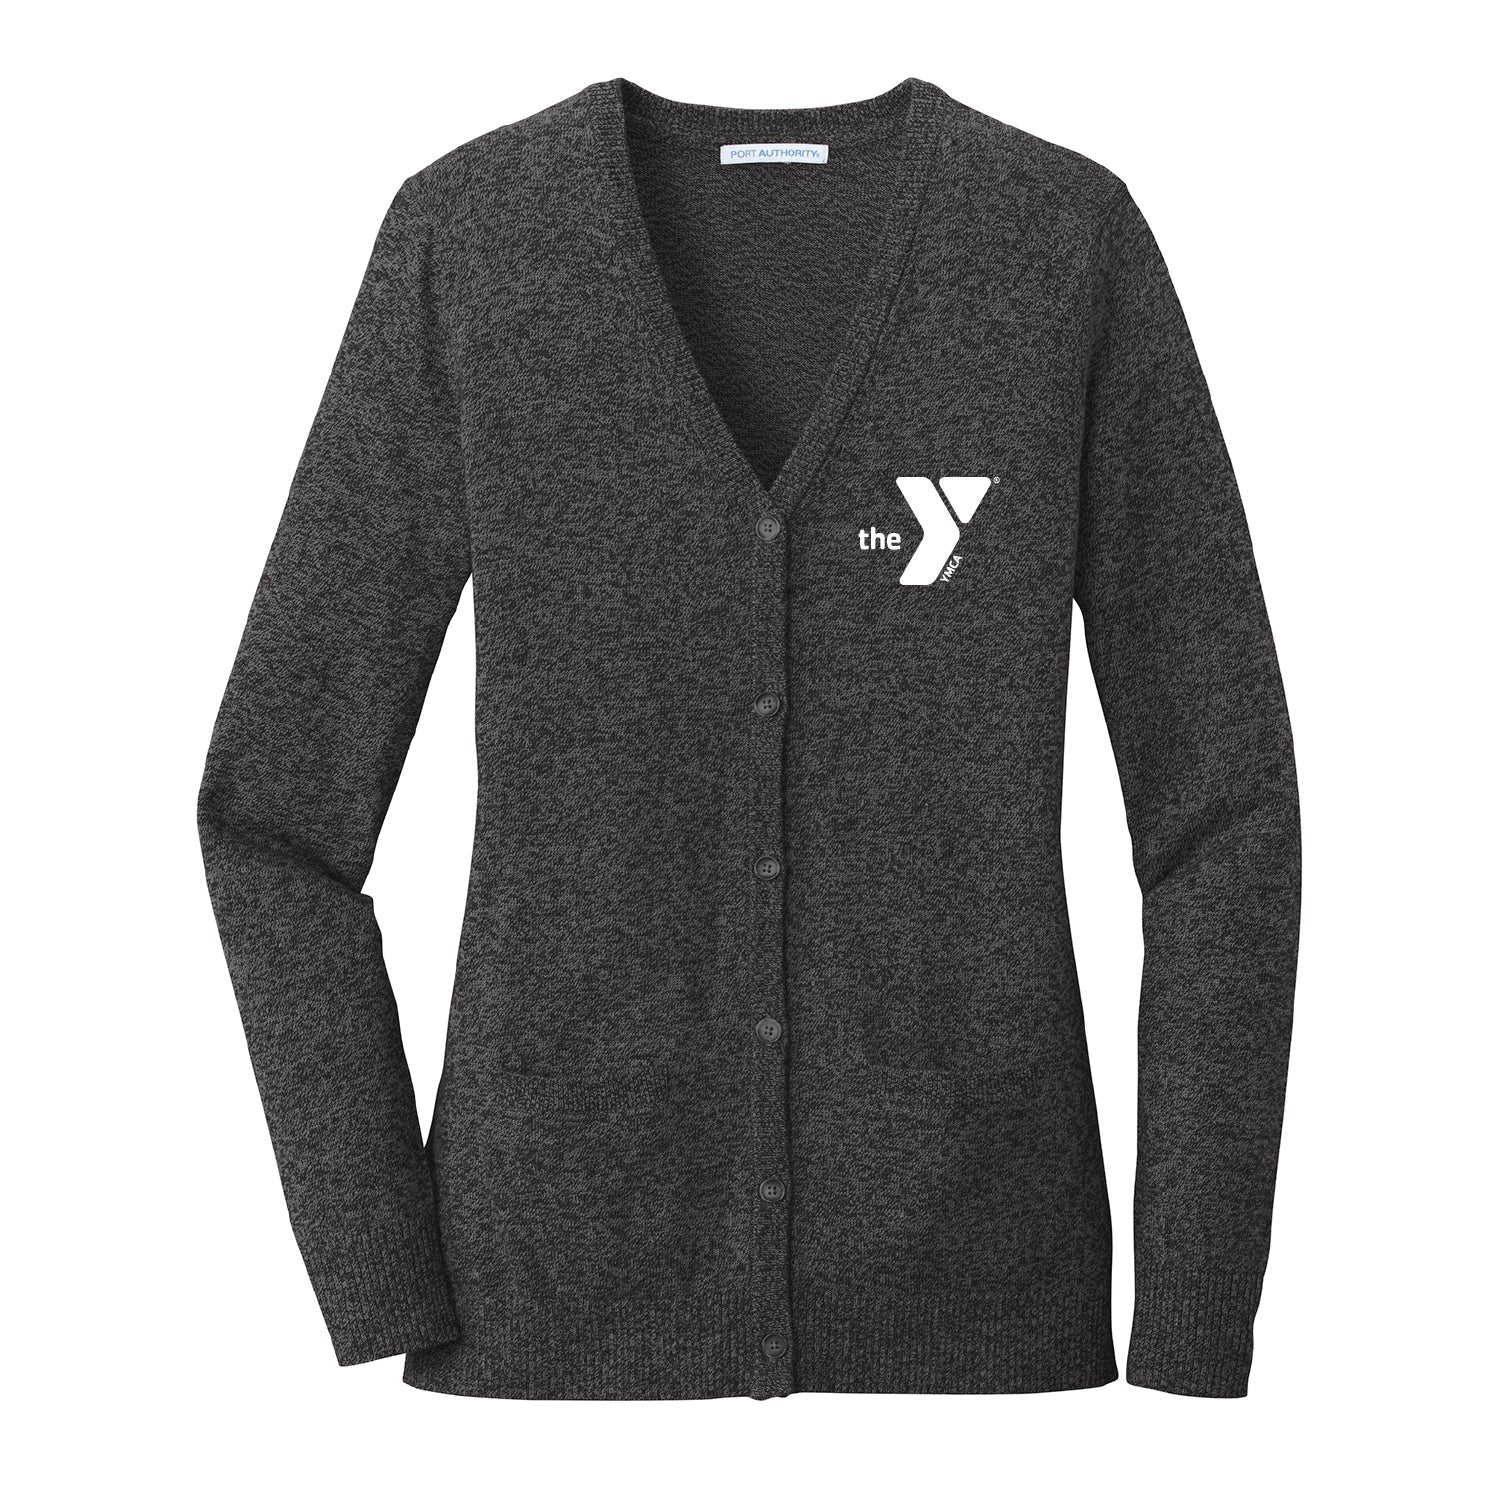 YMCA Ladies Marled Cardigan Sweater - DSP On Demand